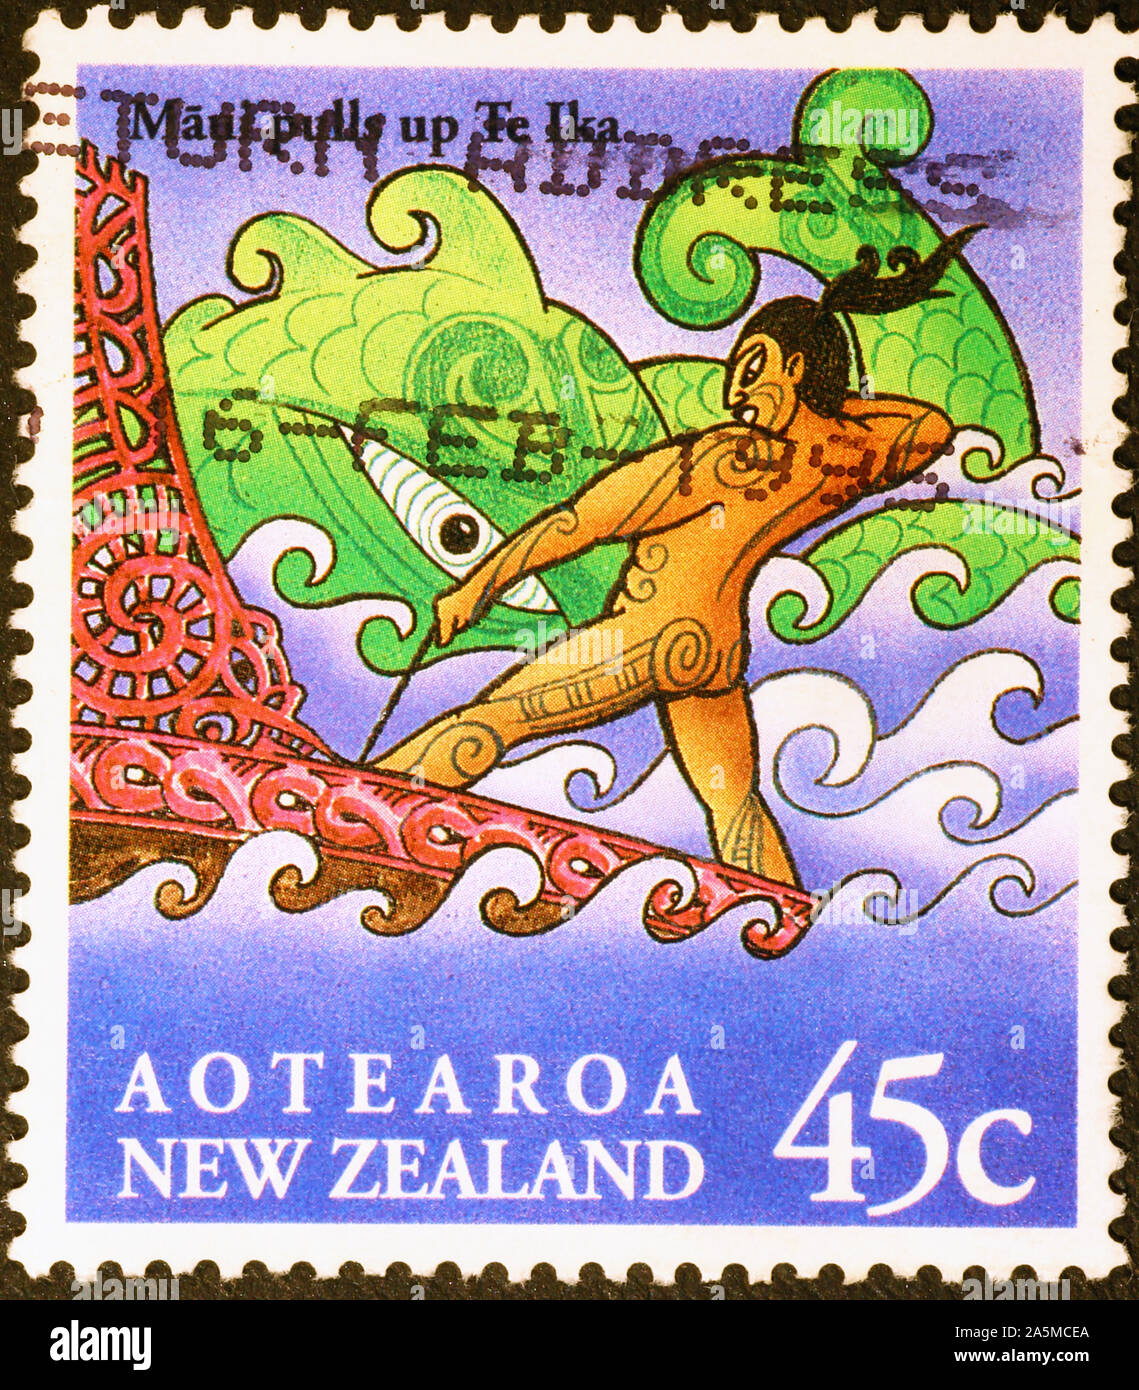 New Zealand mythological tale on postage stamp Stock Photo